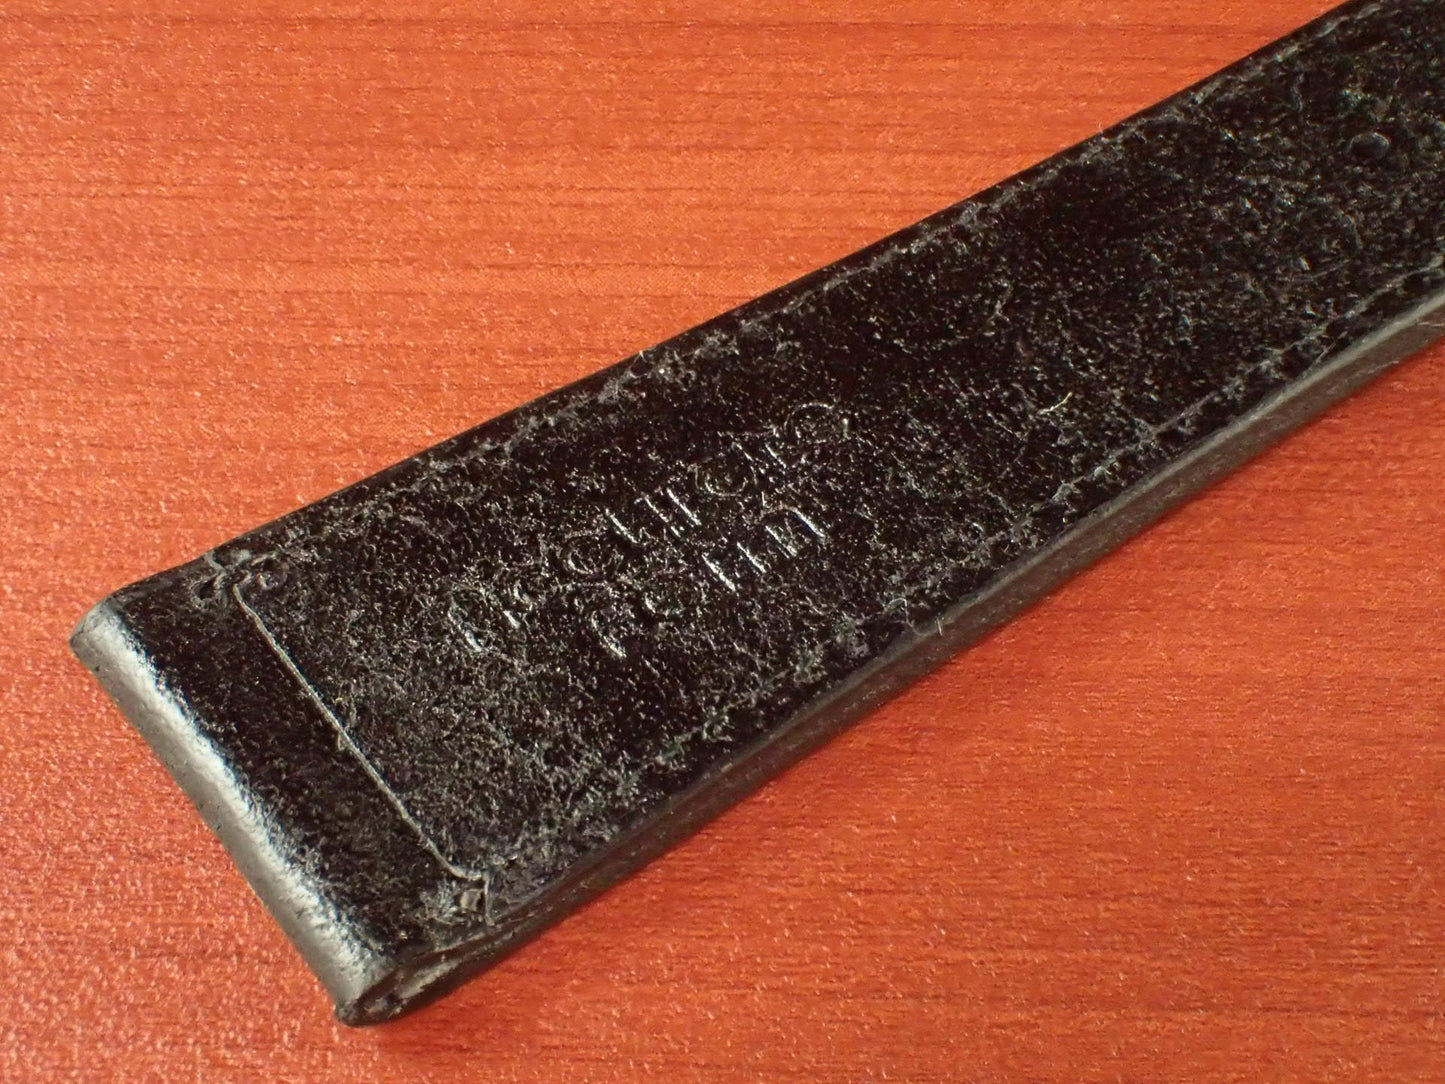 Virgilio VIVIDO Shoulder leather strap (Black)